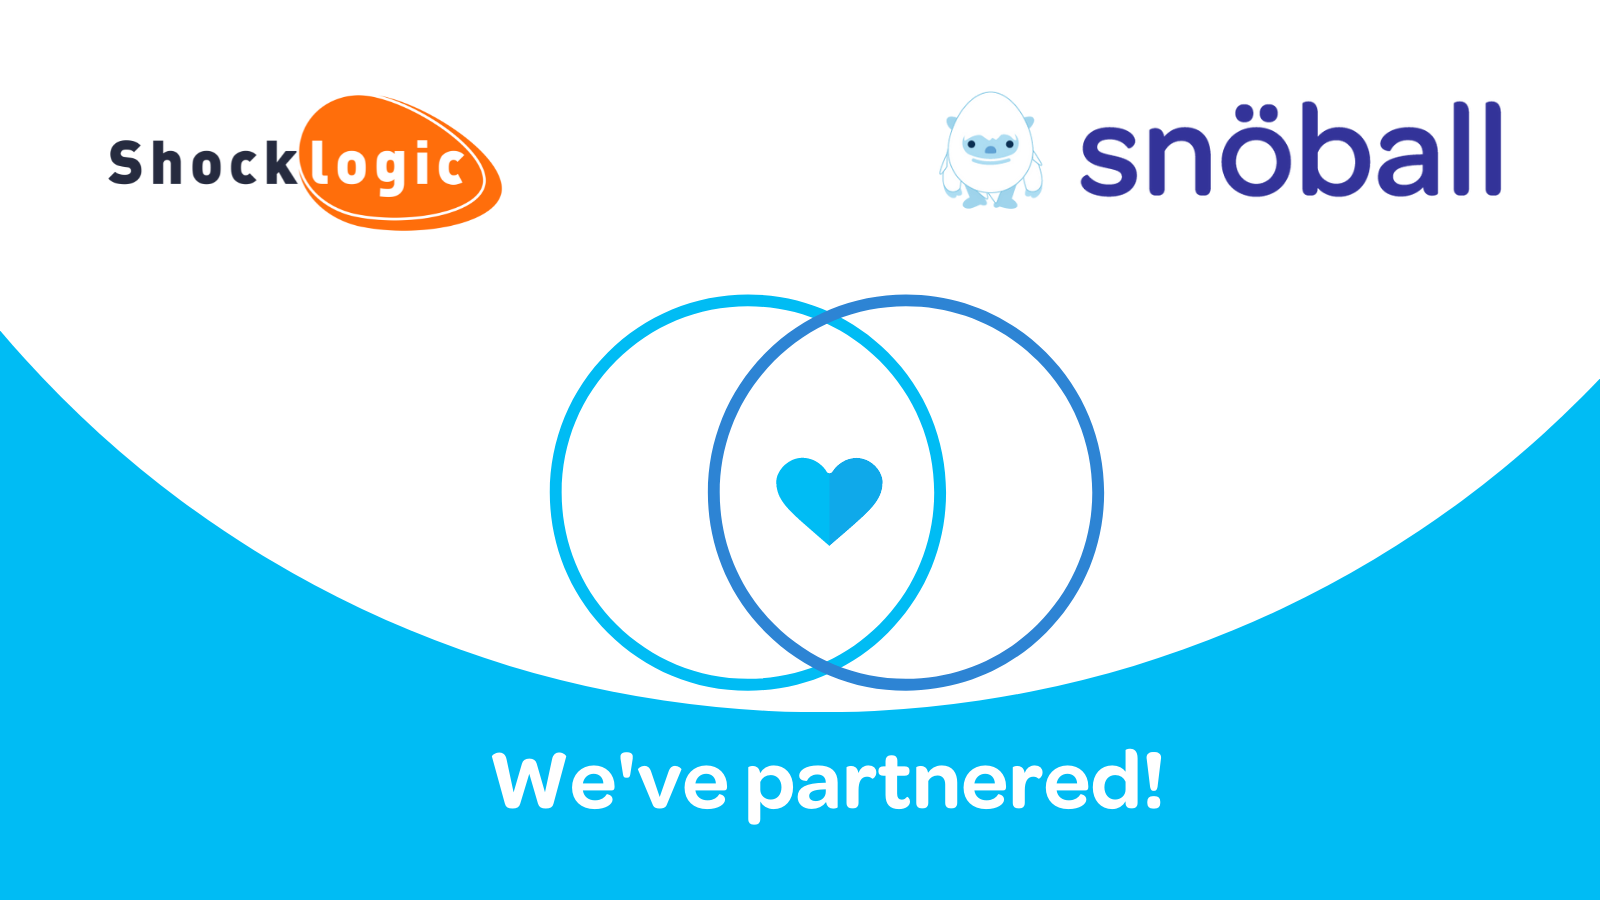 snoball shocklogic partnership